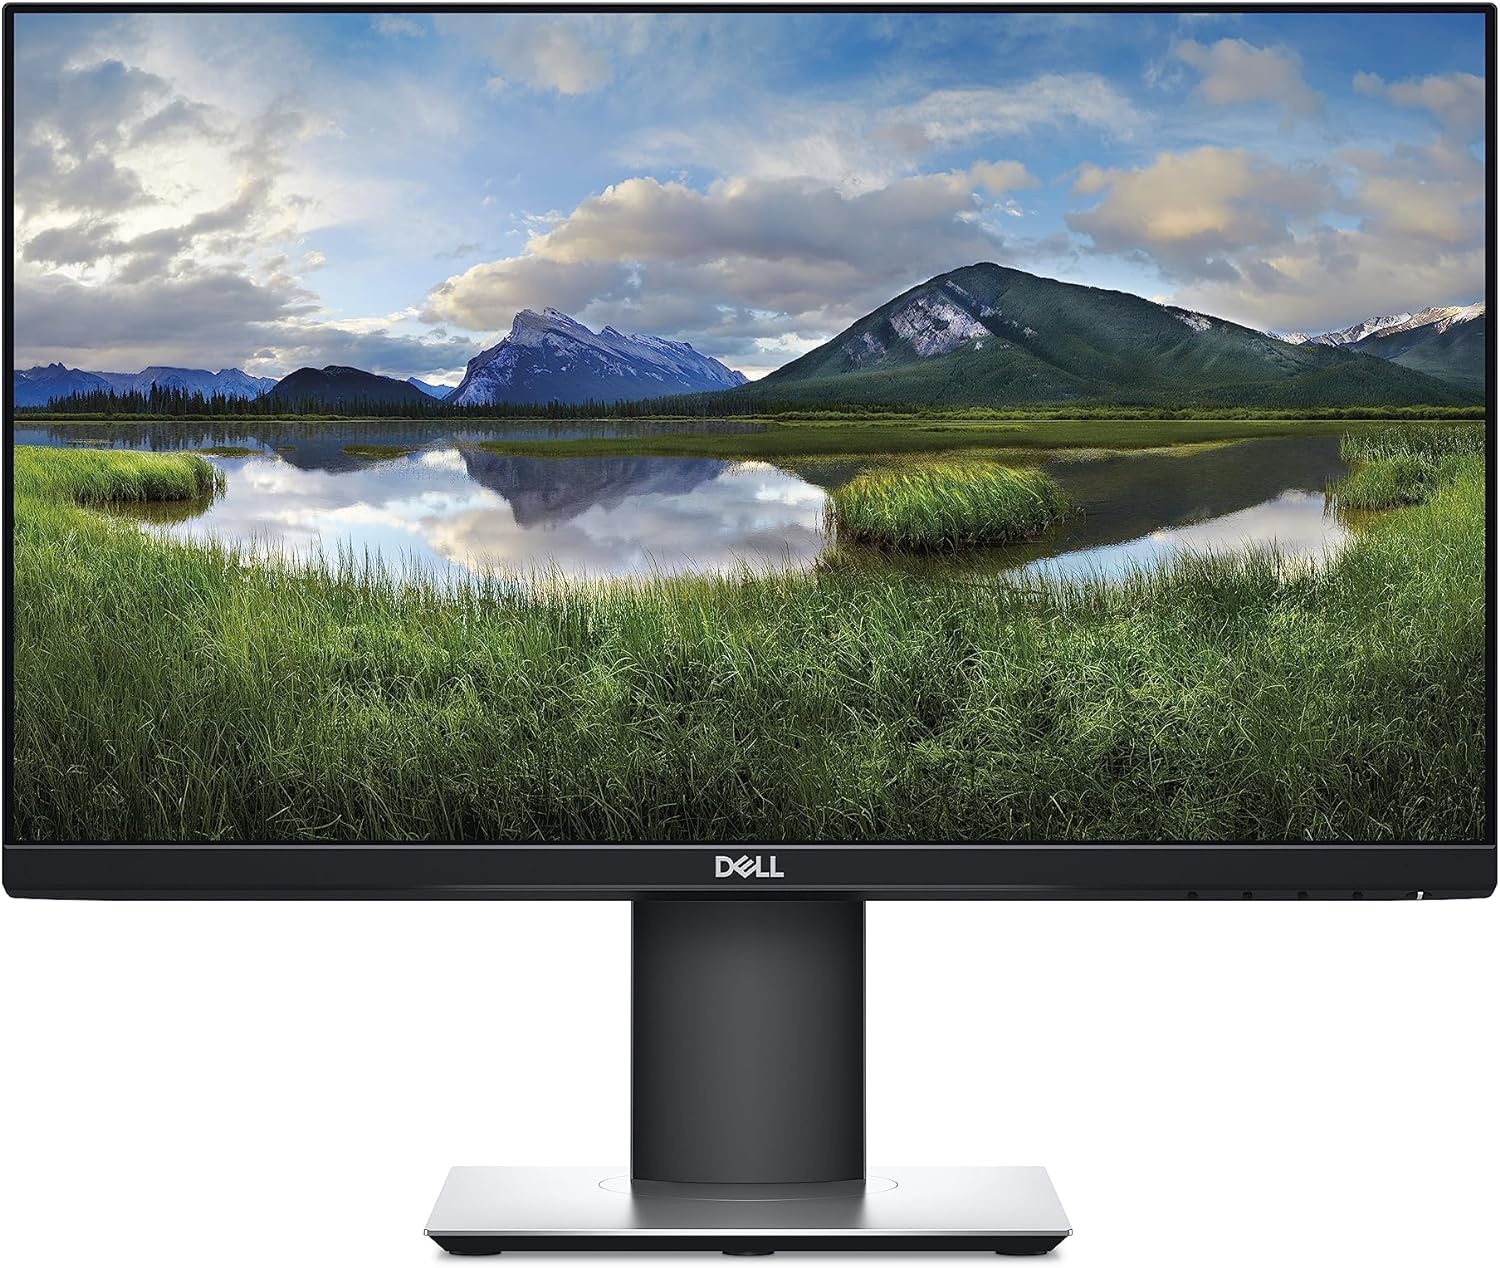 Dell P2219H-C 22" 16:9 Ultrathin Bezel TAA Compliant IPS Monitor - C stock Refurbished